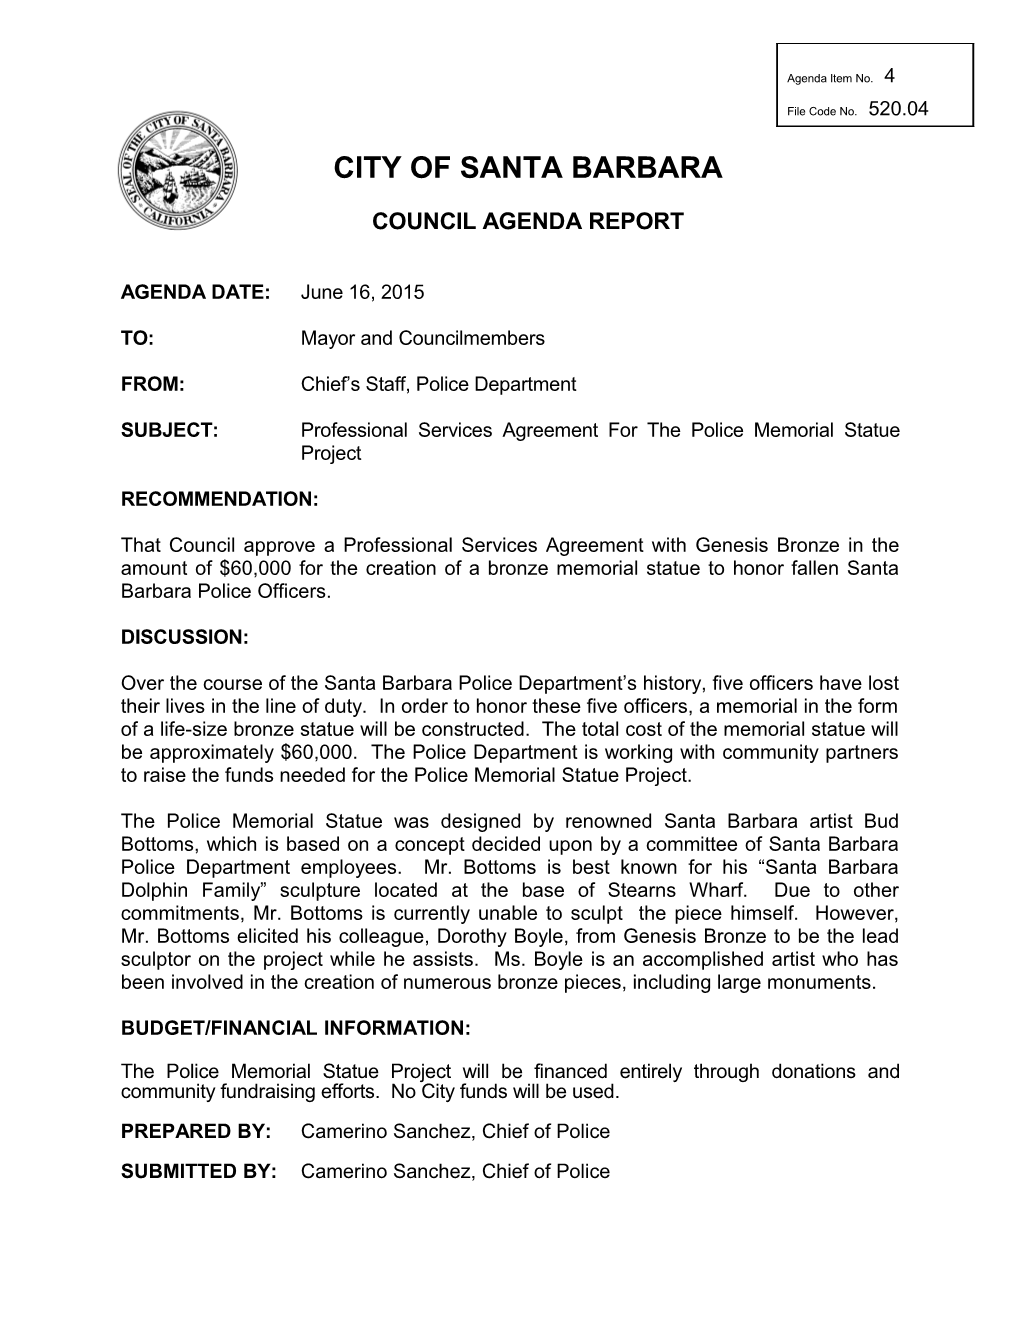 City of Santa Barbara s3